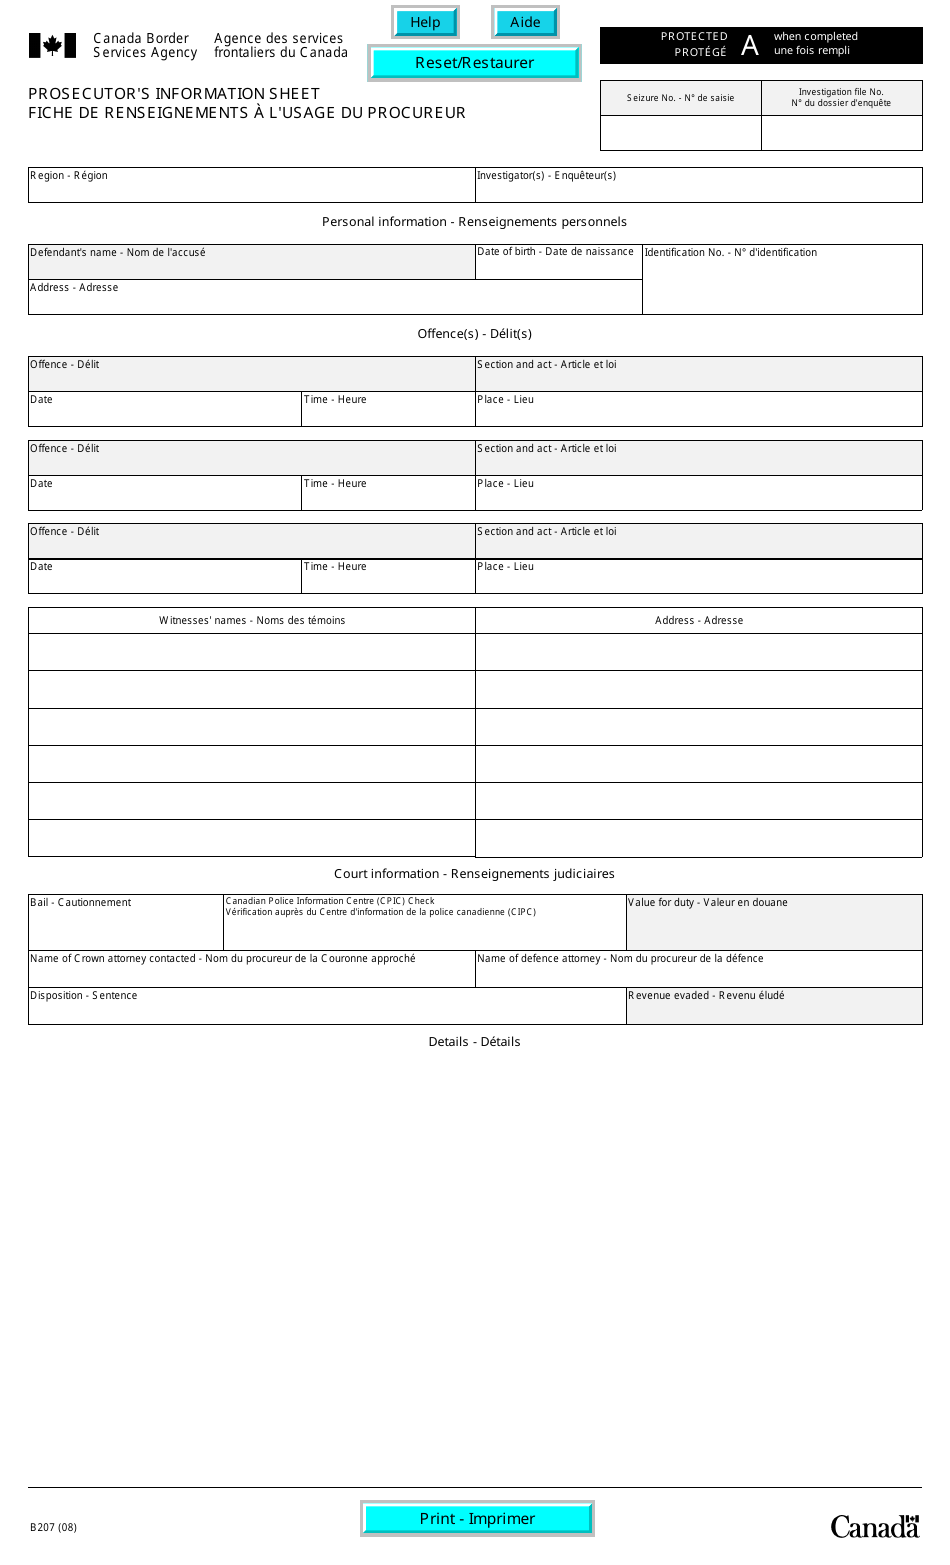 Form B207 Prosecutors Information Sheet - Canada (English / French), Page 1